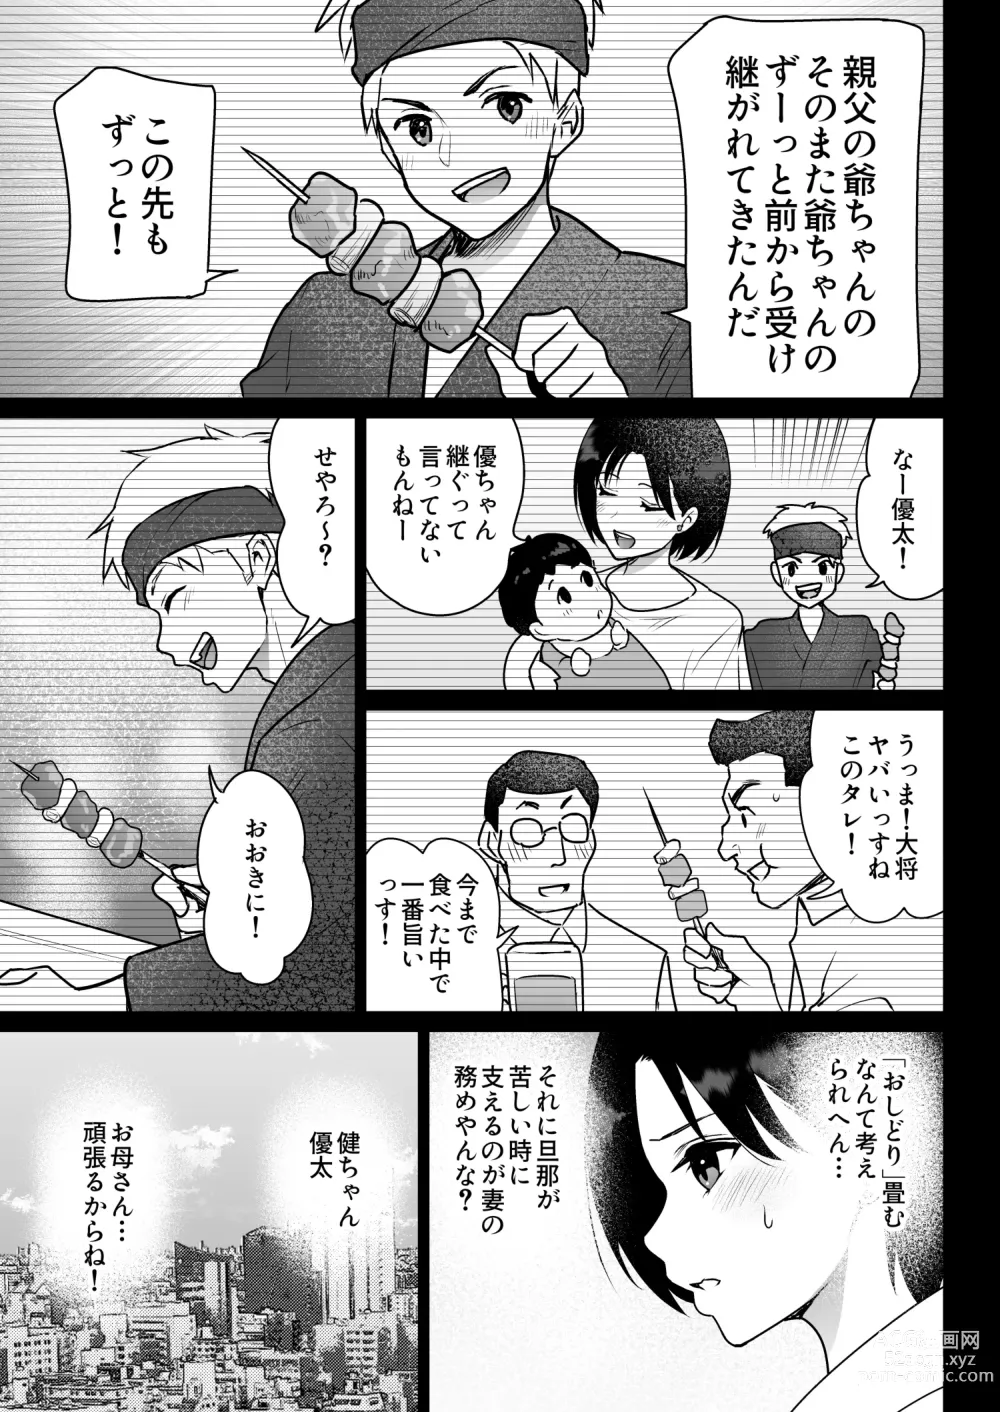 Page 18 of doujinshi Oshidori Fuufu Yakitorare